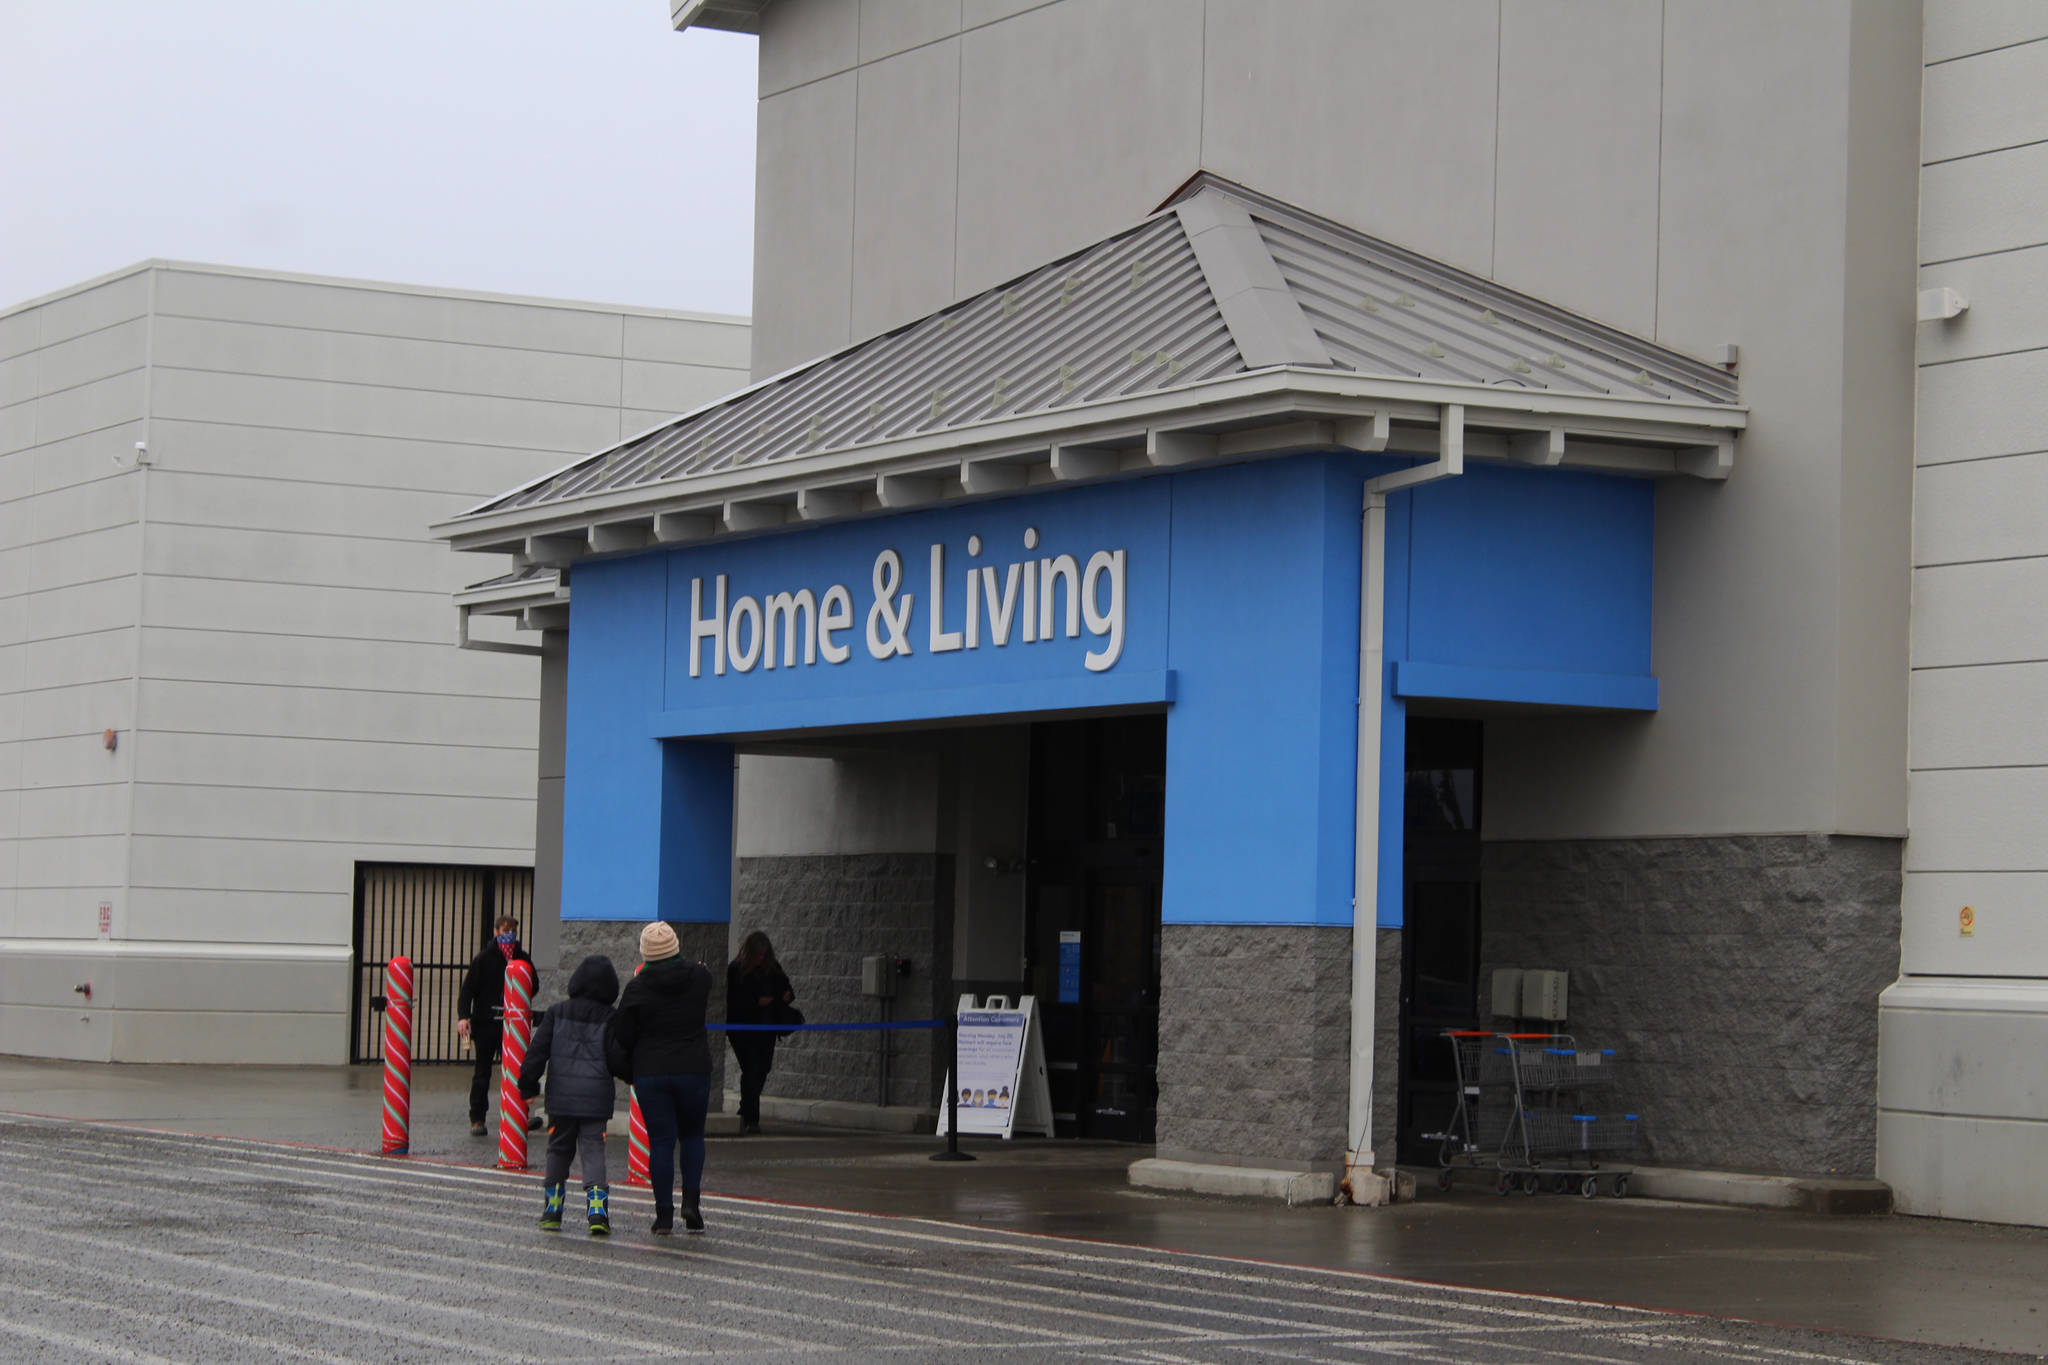 People are seen walking into Walmart on Wednesday, November 25 in Kenai, Alaska.